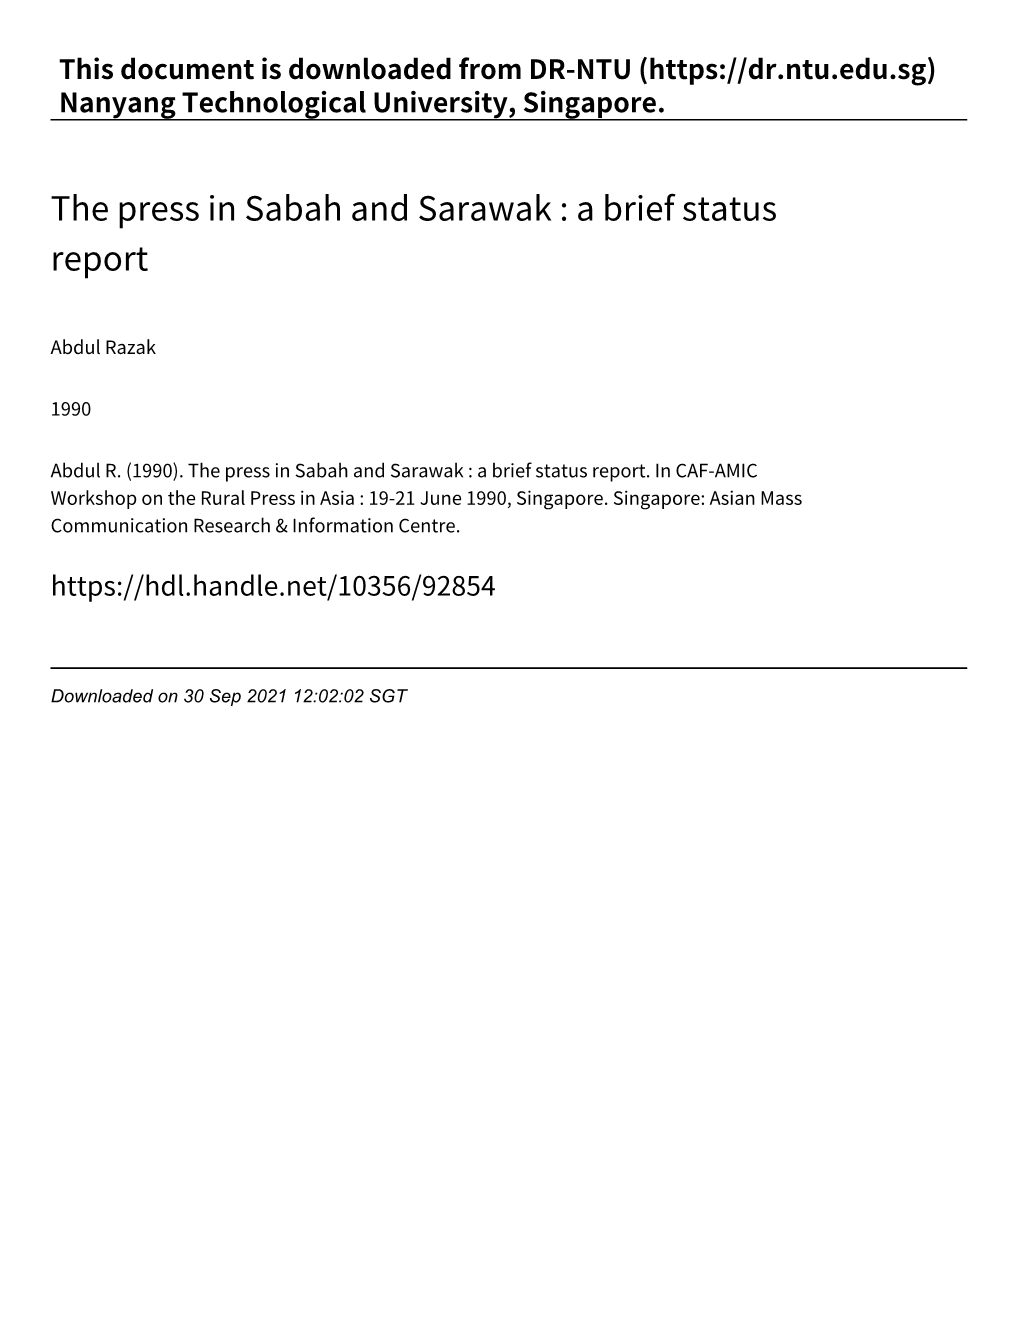 The Press in Sabah and Sarawak : a Brief Status Report